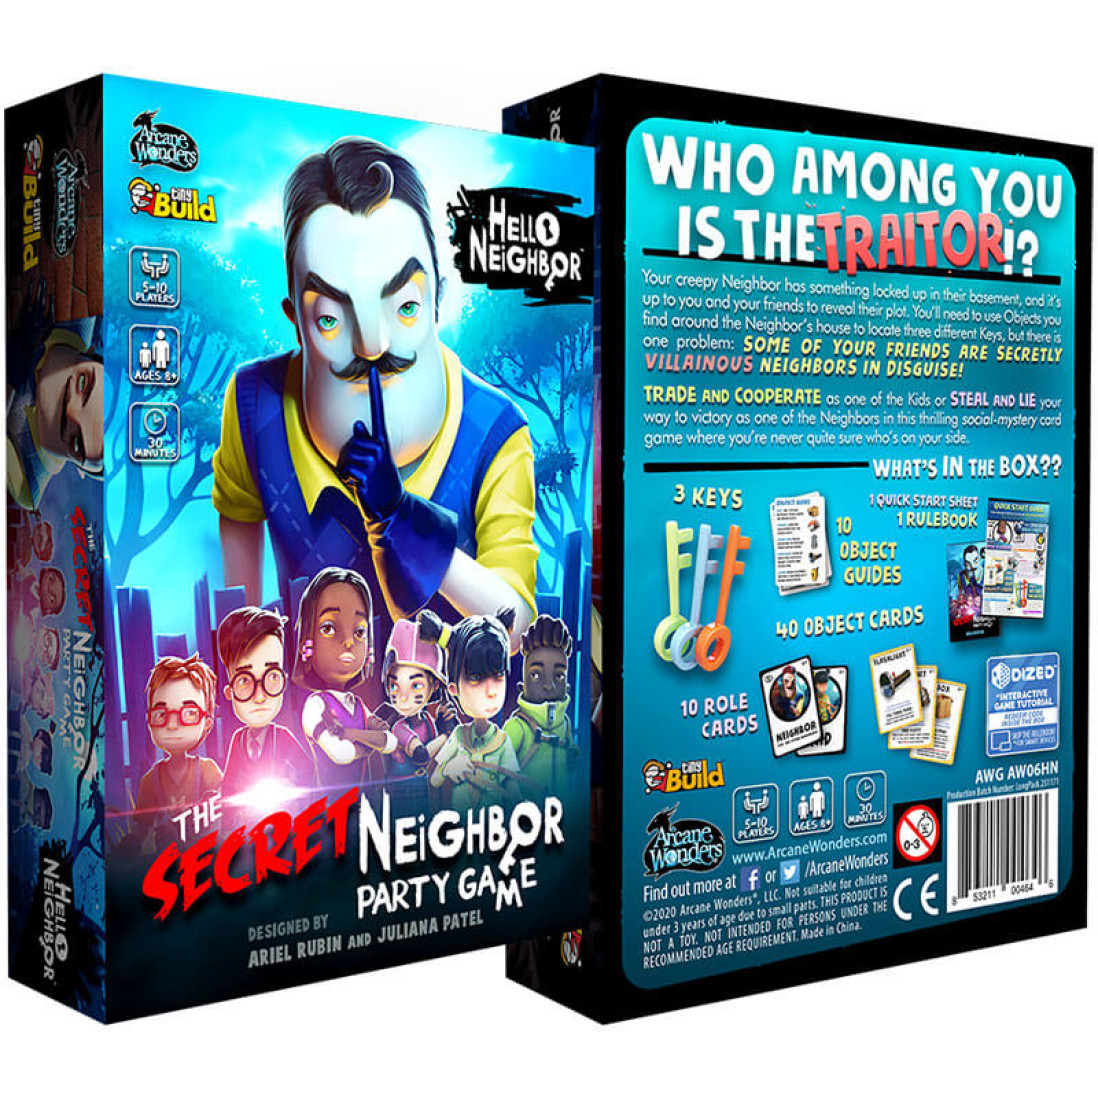 the secret neighbor party game